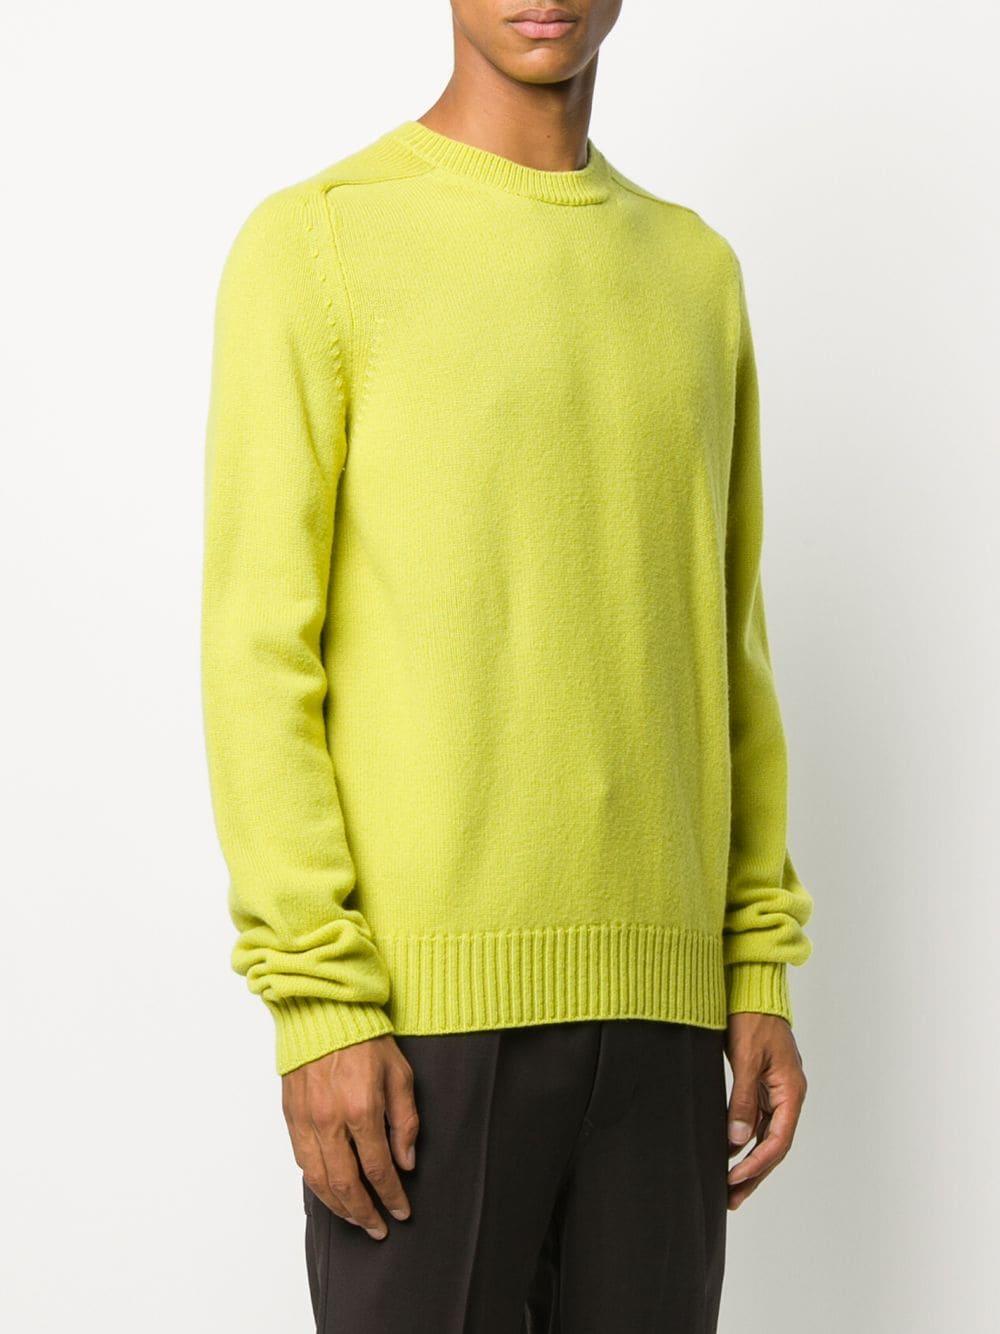 Bottega Veneta Wool Crew Neck Sweater in Green for Men - Lyst